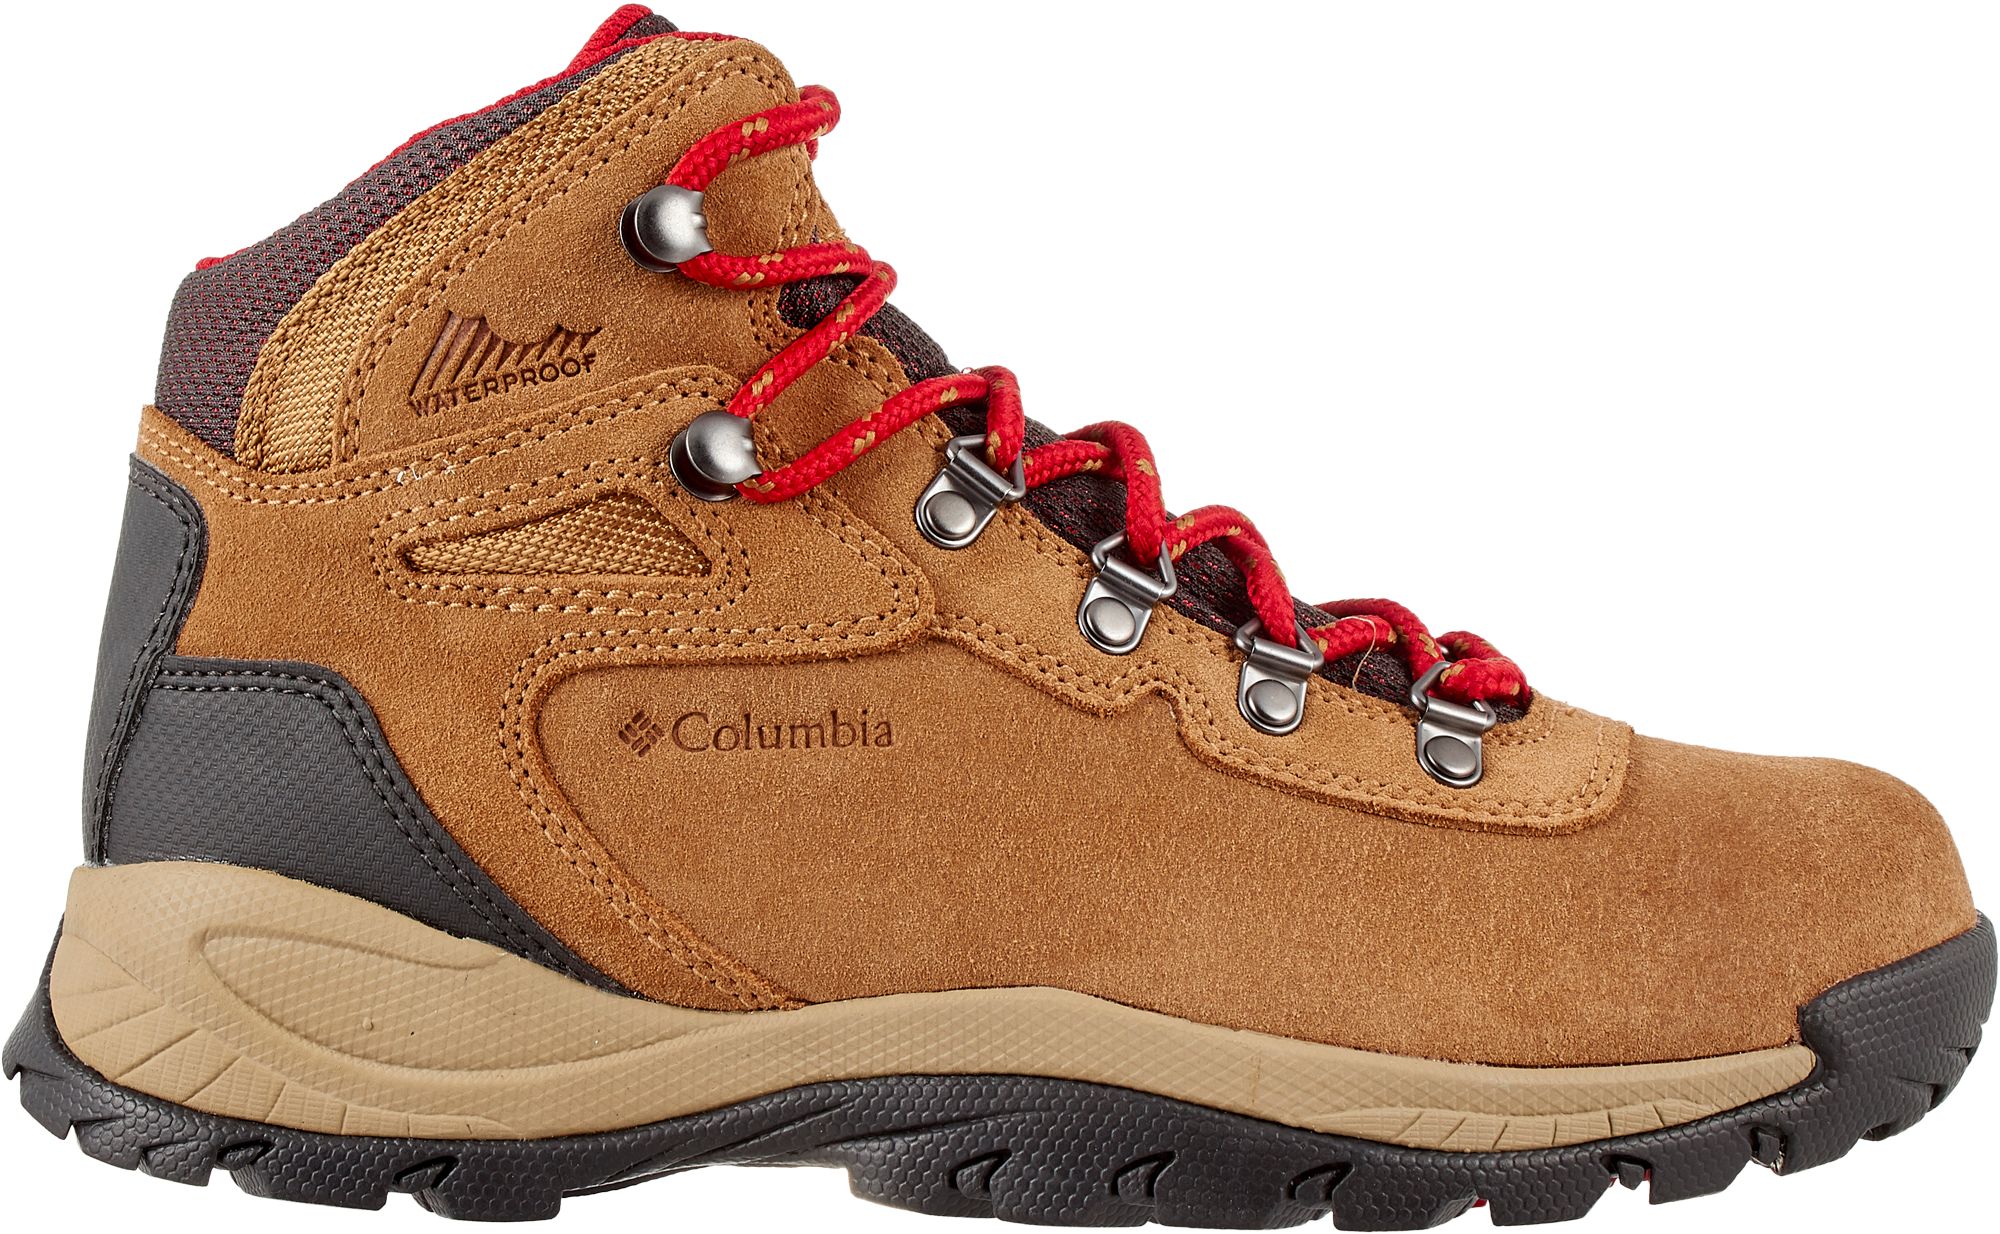 Photos - Trekking Shoes Columbia Women's Newton Ridge Plus Amped Waterproof Hiking Boots, Size 7.5 